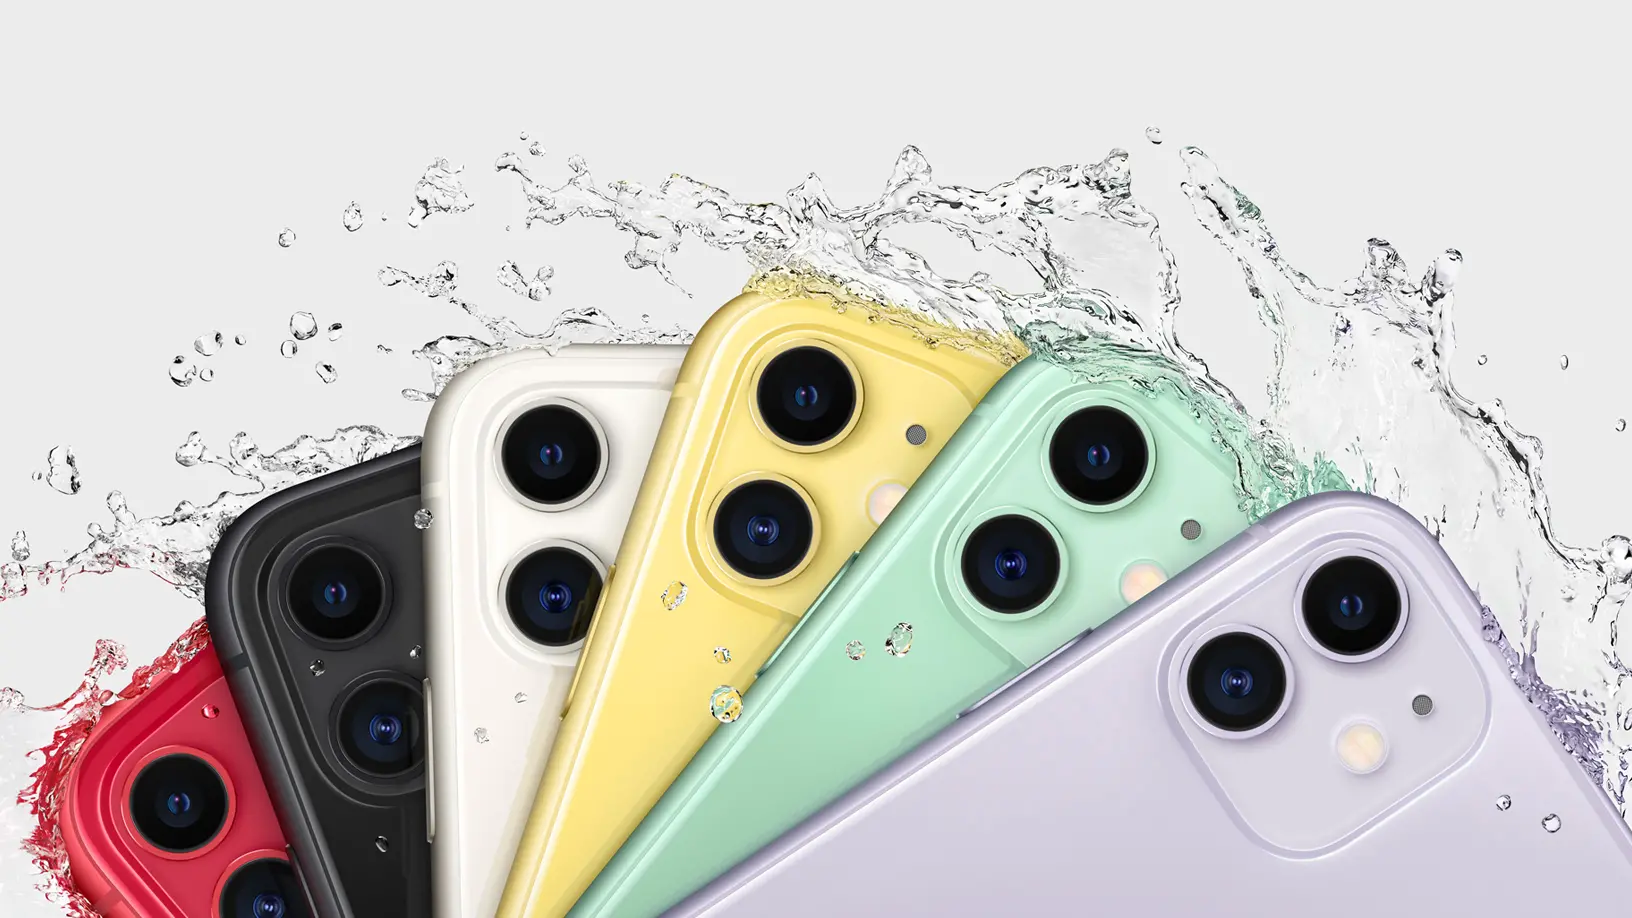 Apple iphone 11 water resistant 091019 1